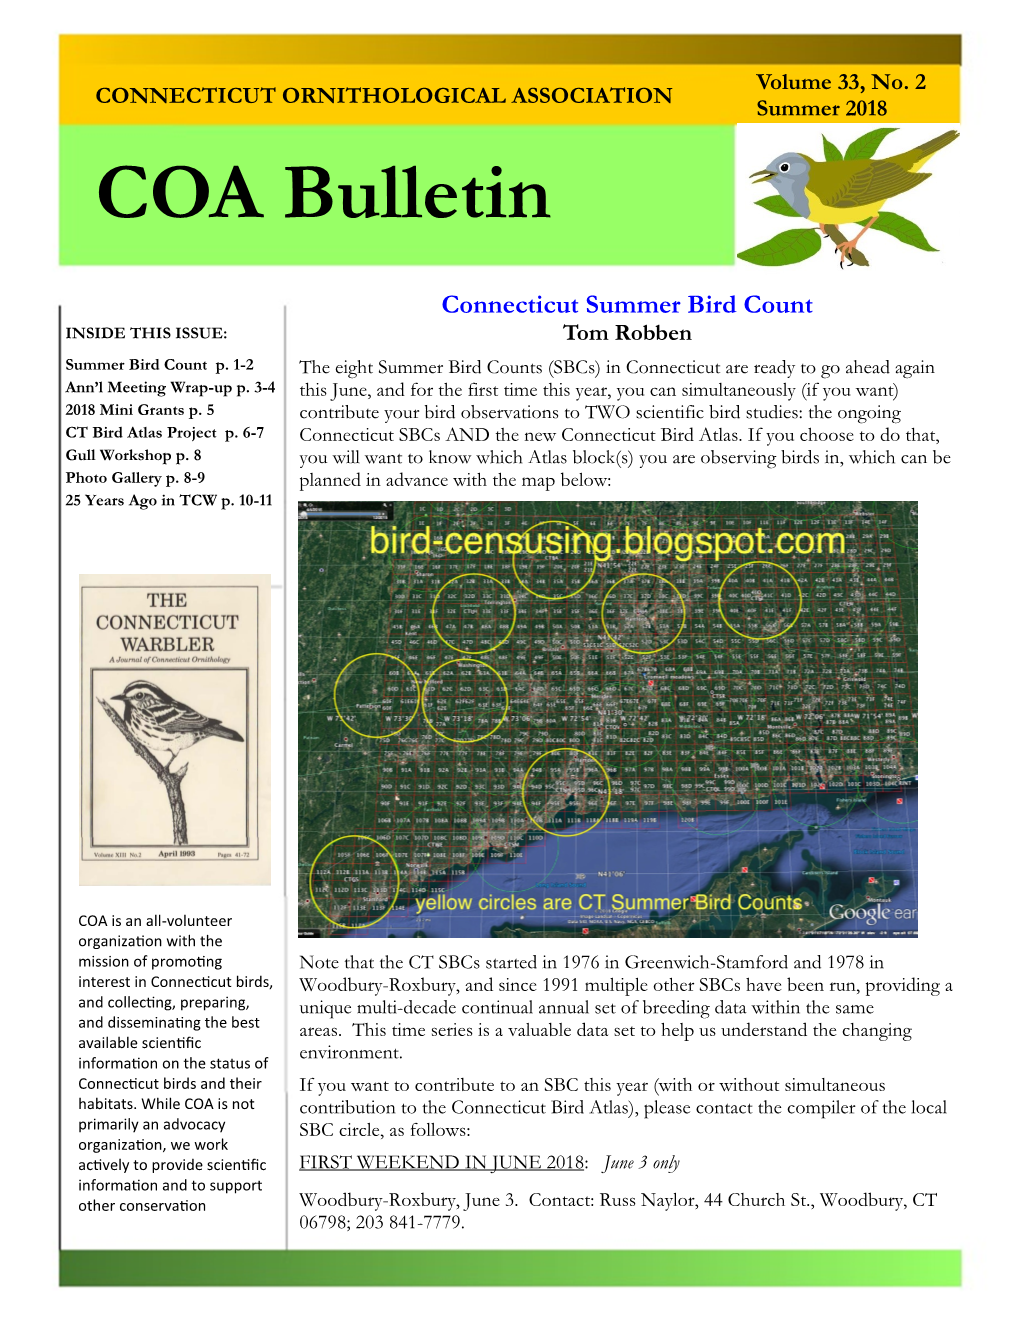 COA Bulletin